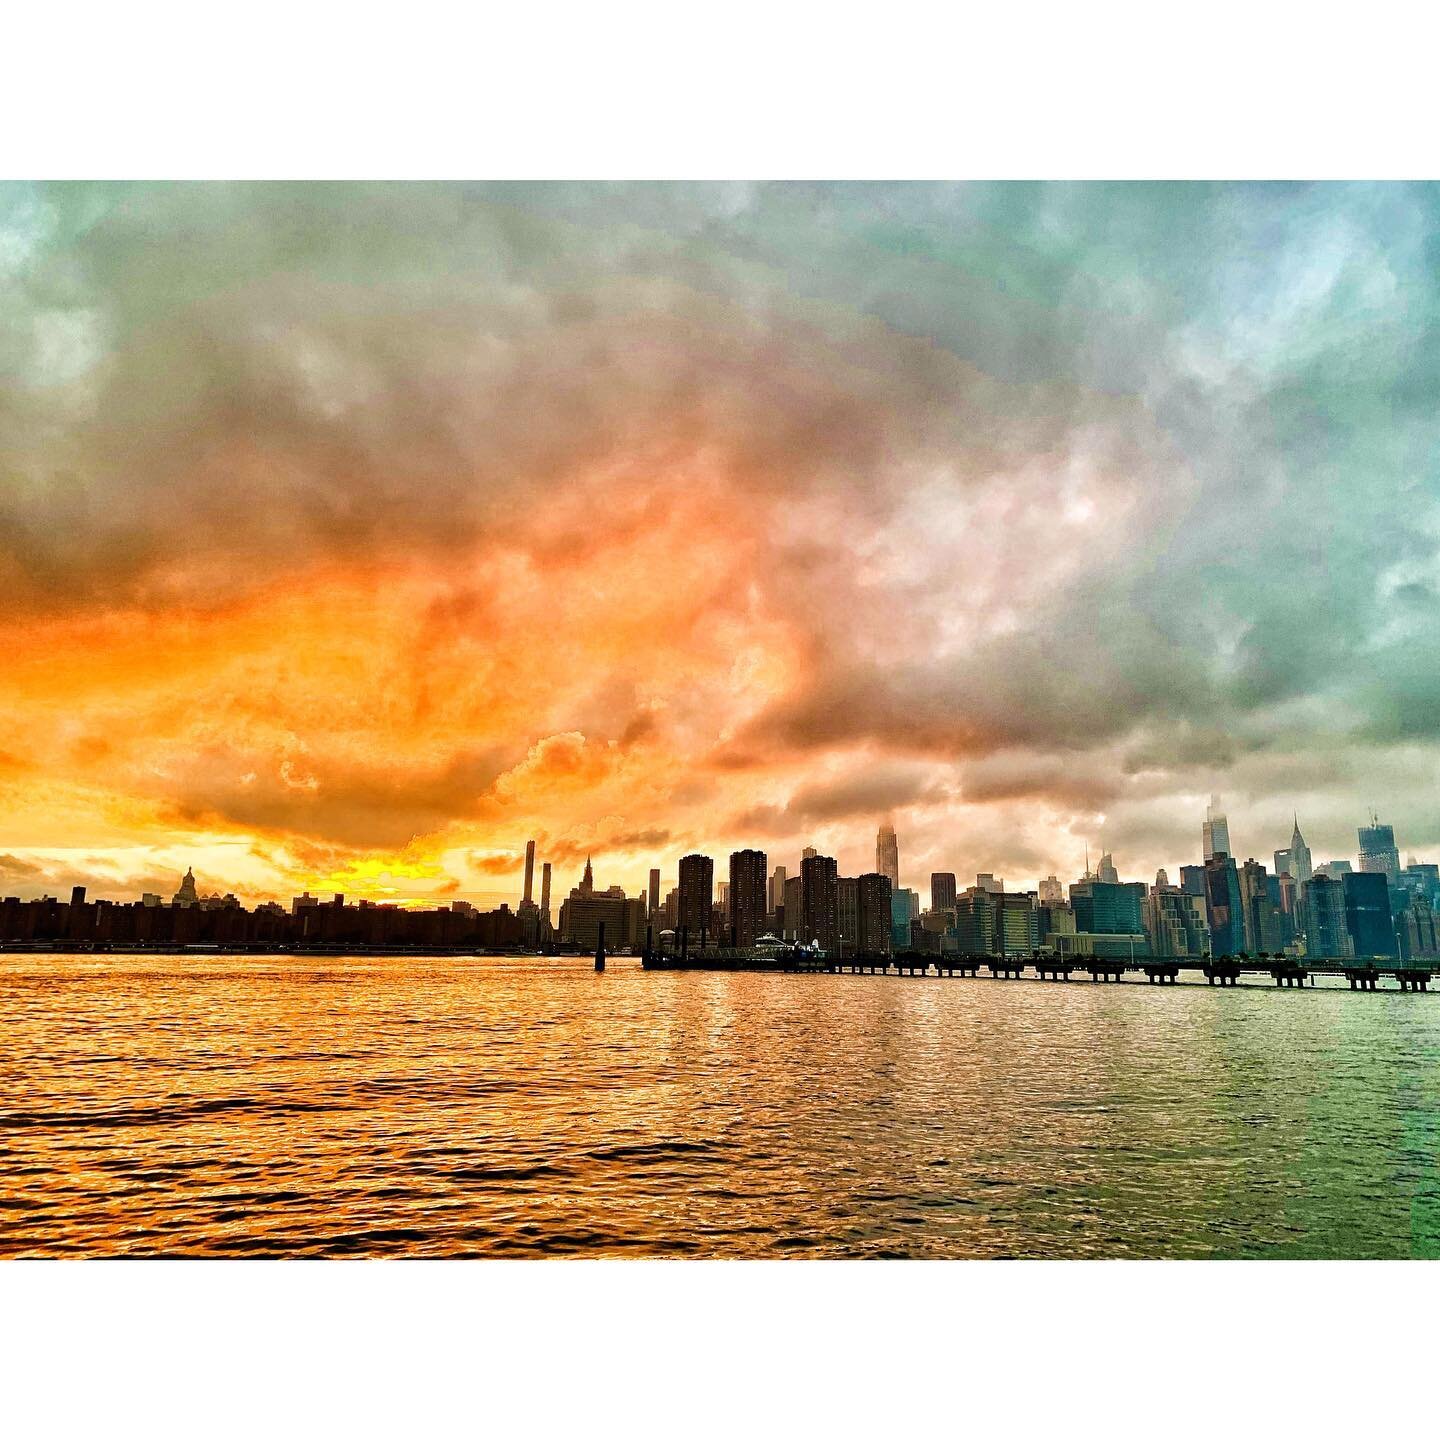 Most definitely a Susanna sky. #sunset #susannaheller #greenpoint #nyc